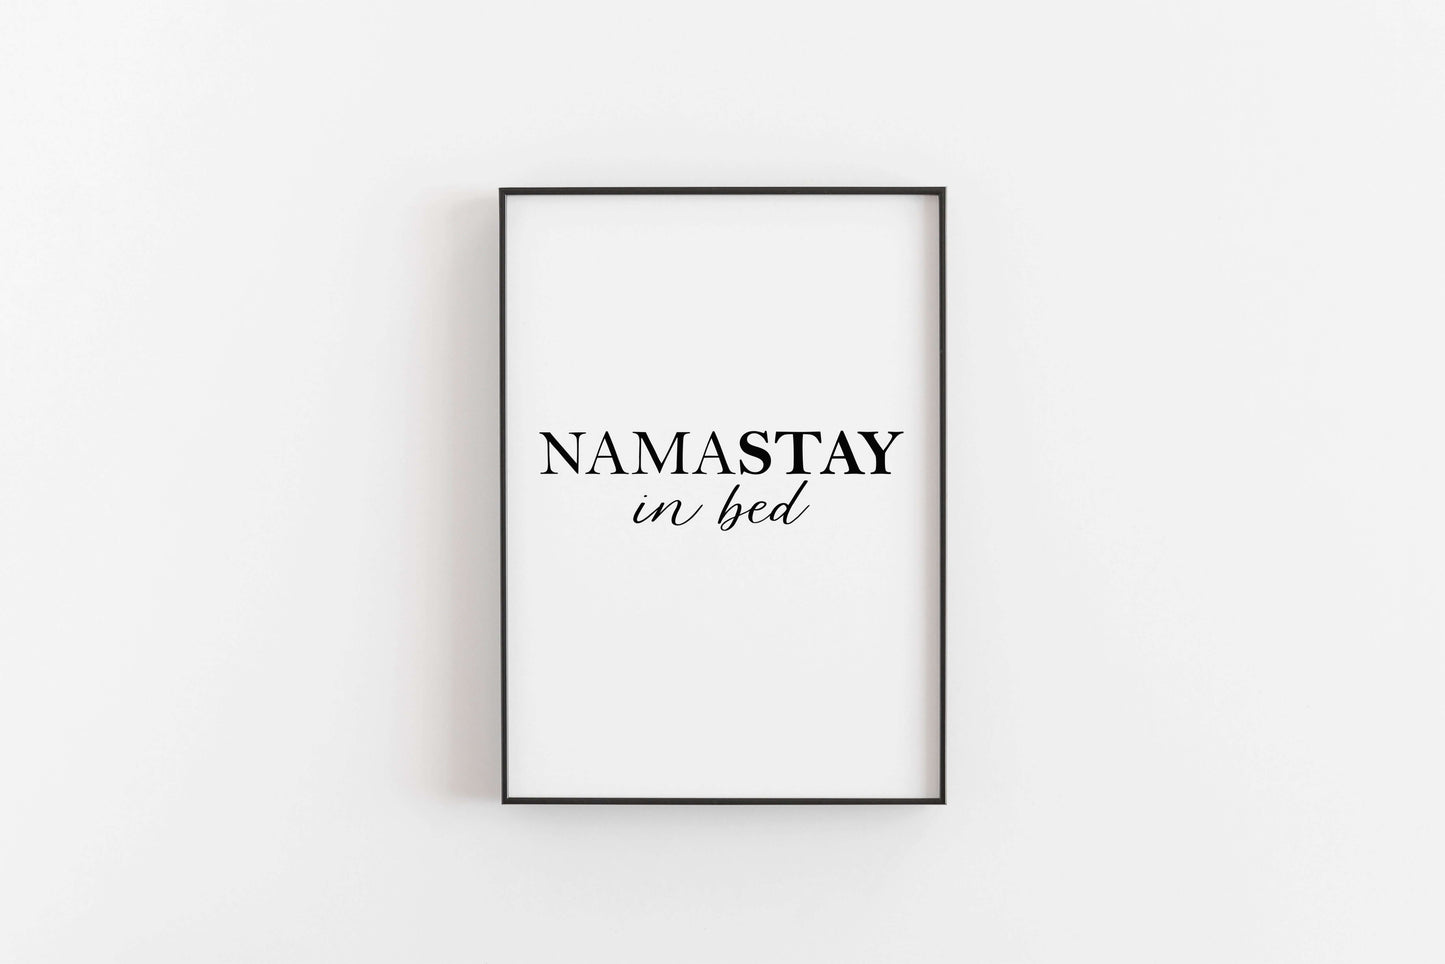 Namastay Print, Bedroom Prints, Wall Art, Home Decor, Bedroom Decor, Bedroom Art, Namastay In Bed, Home Prints, Wall Prints